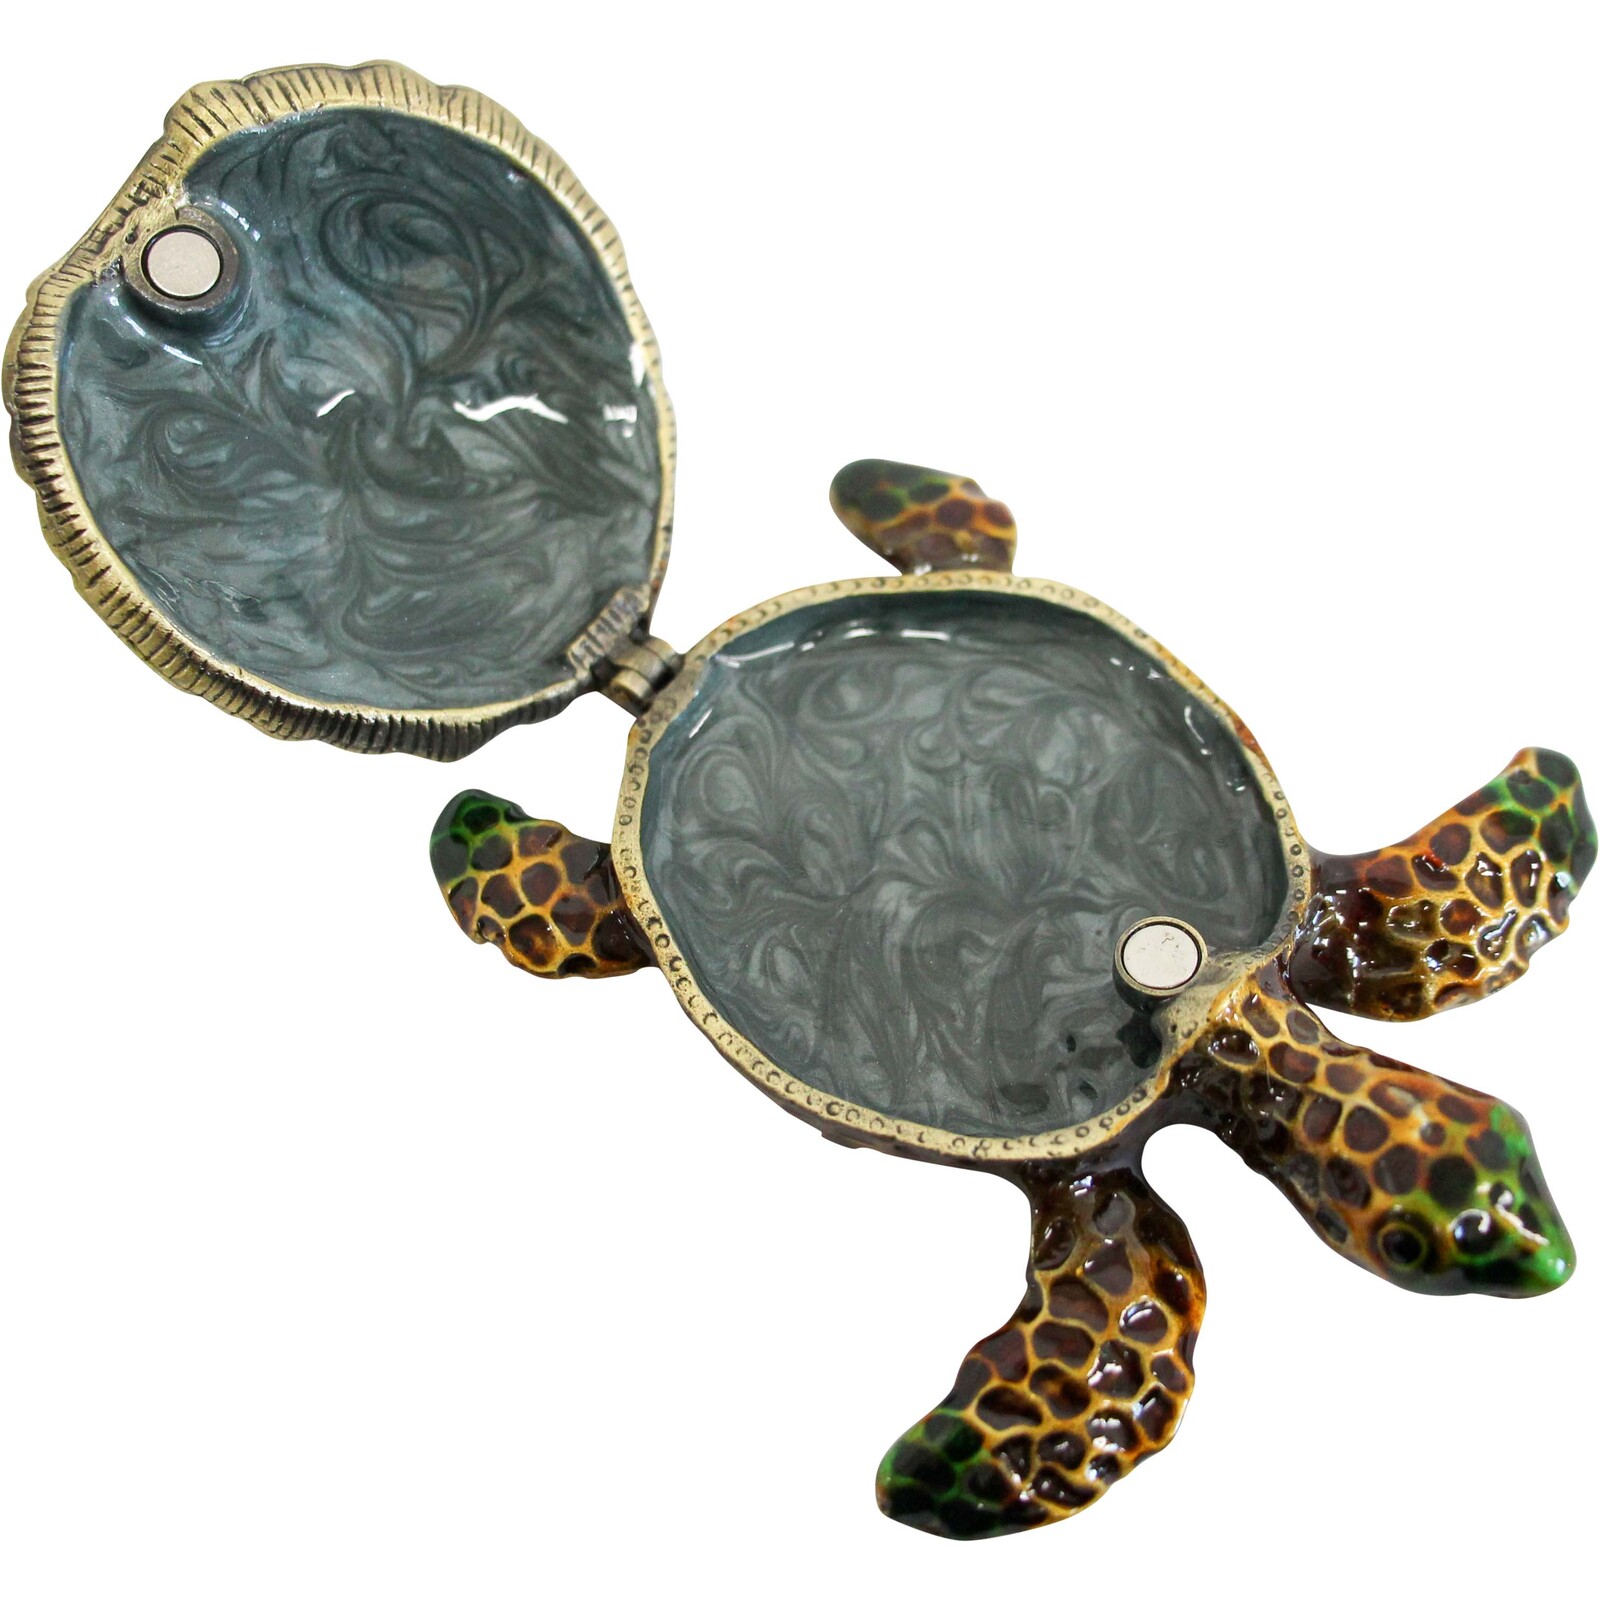 Decorative Turtle Trinket Box